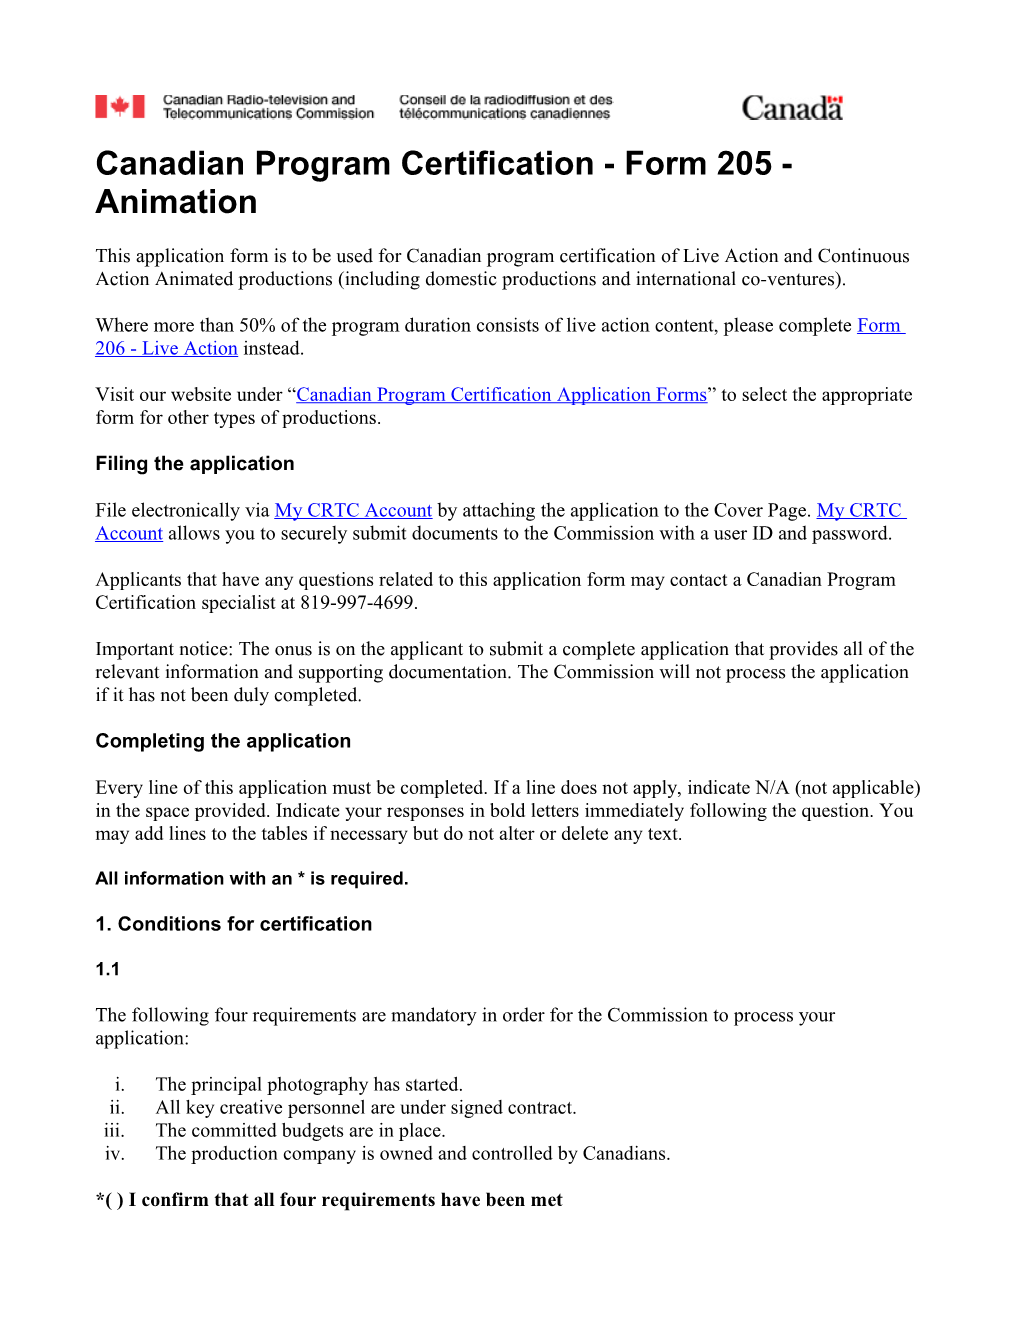 Canadian Program Certification - Form 205 - Animation